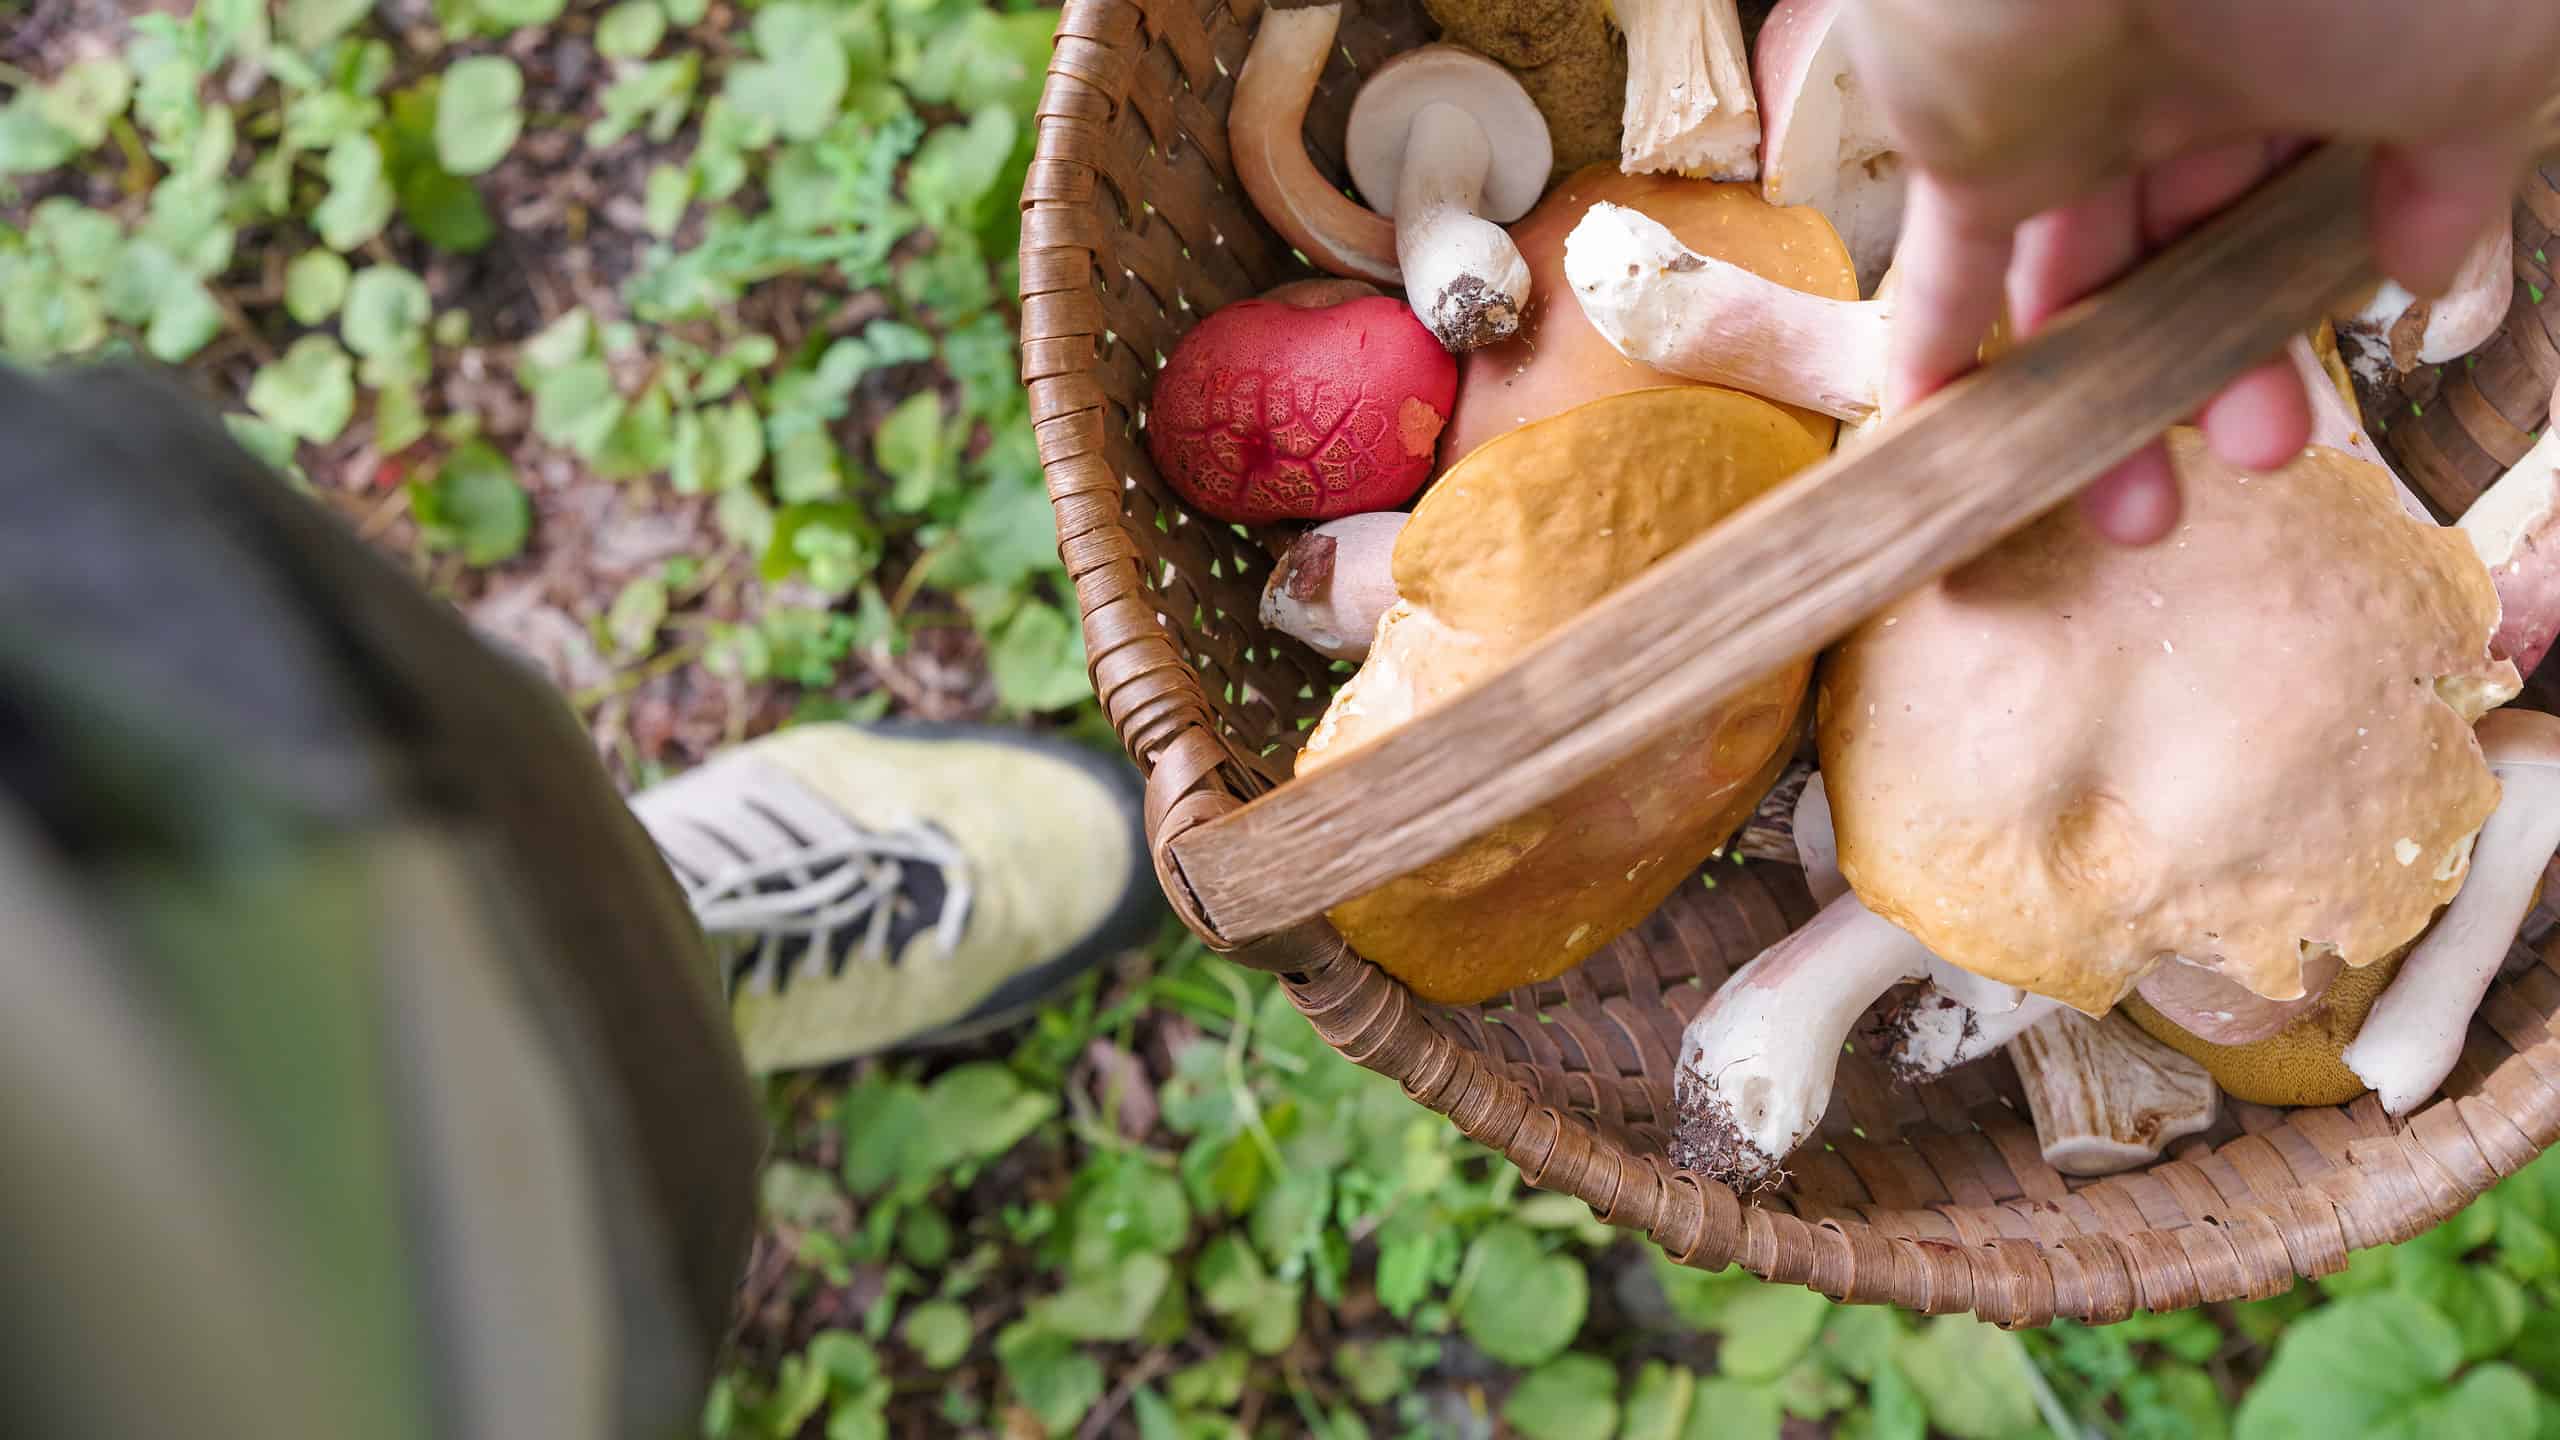 Someone holding basket of foraged wild mushrooms